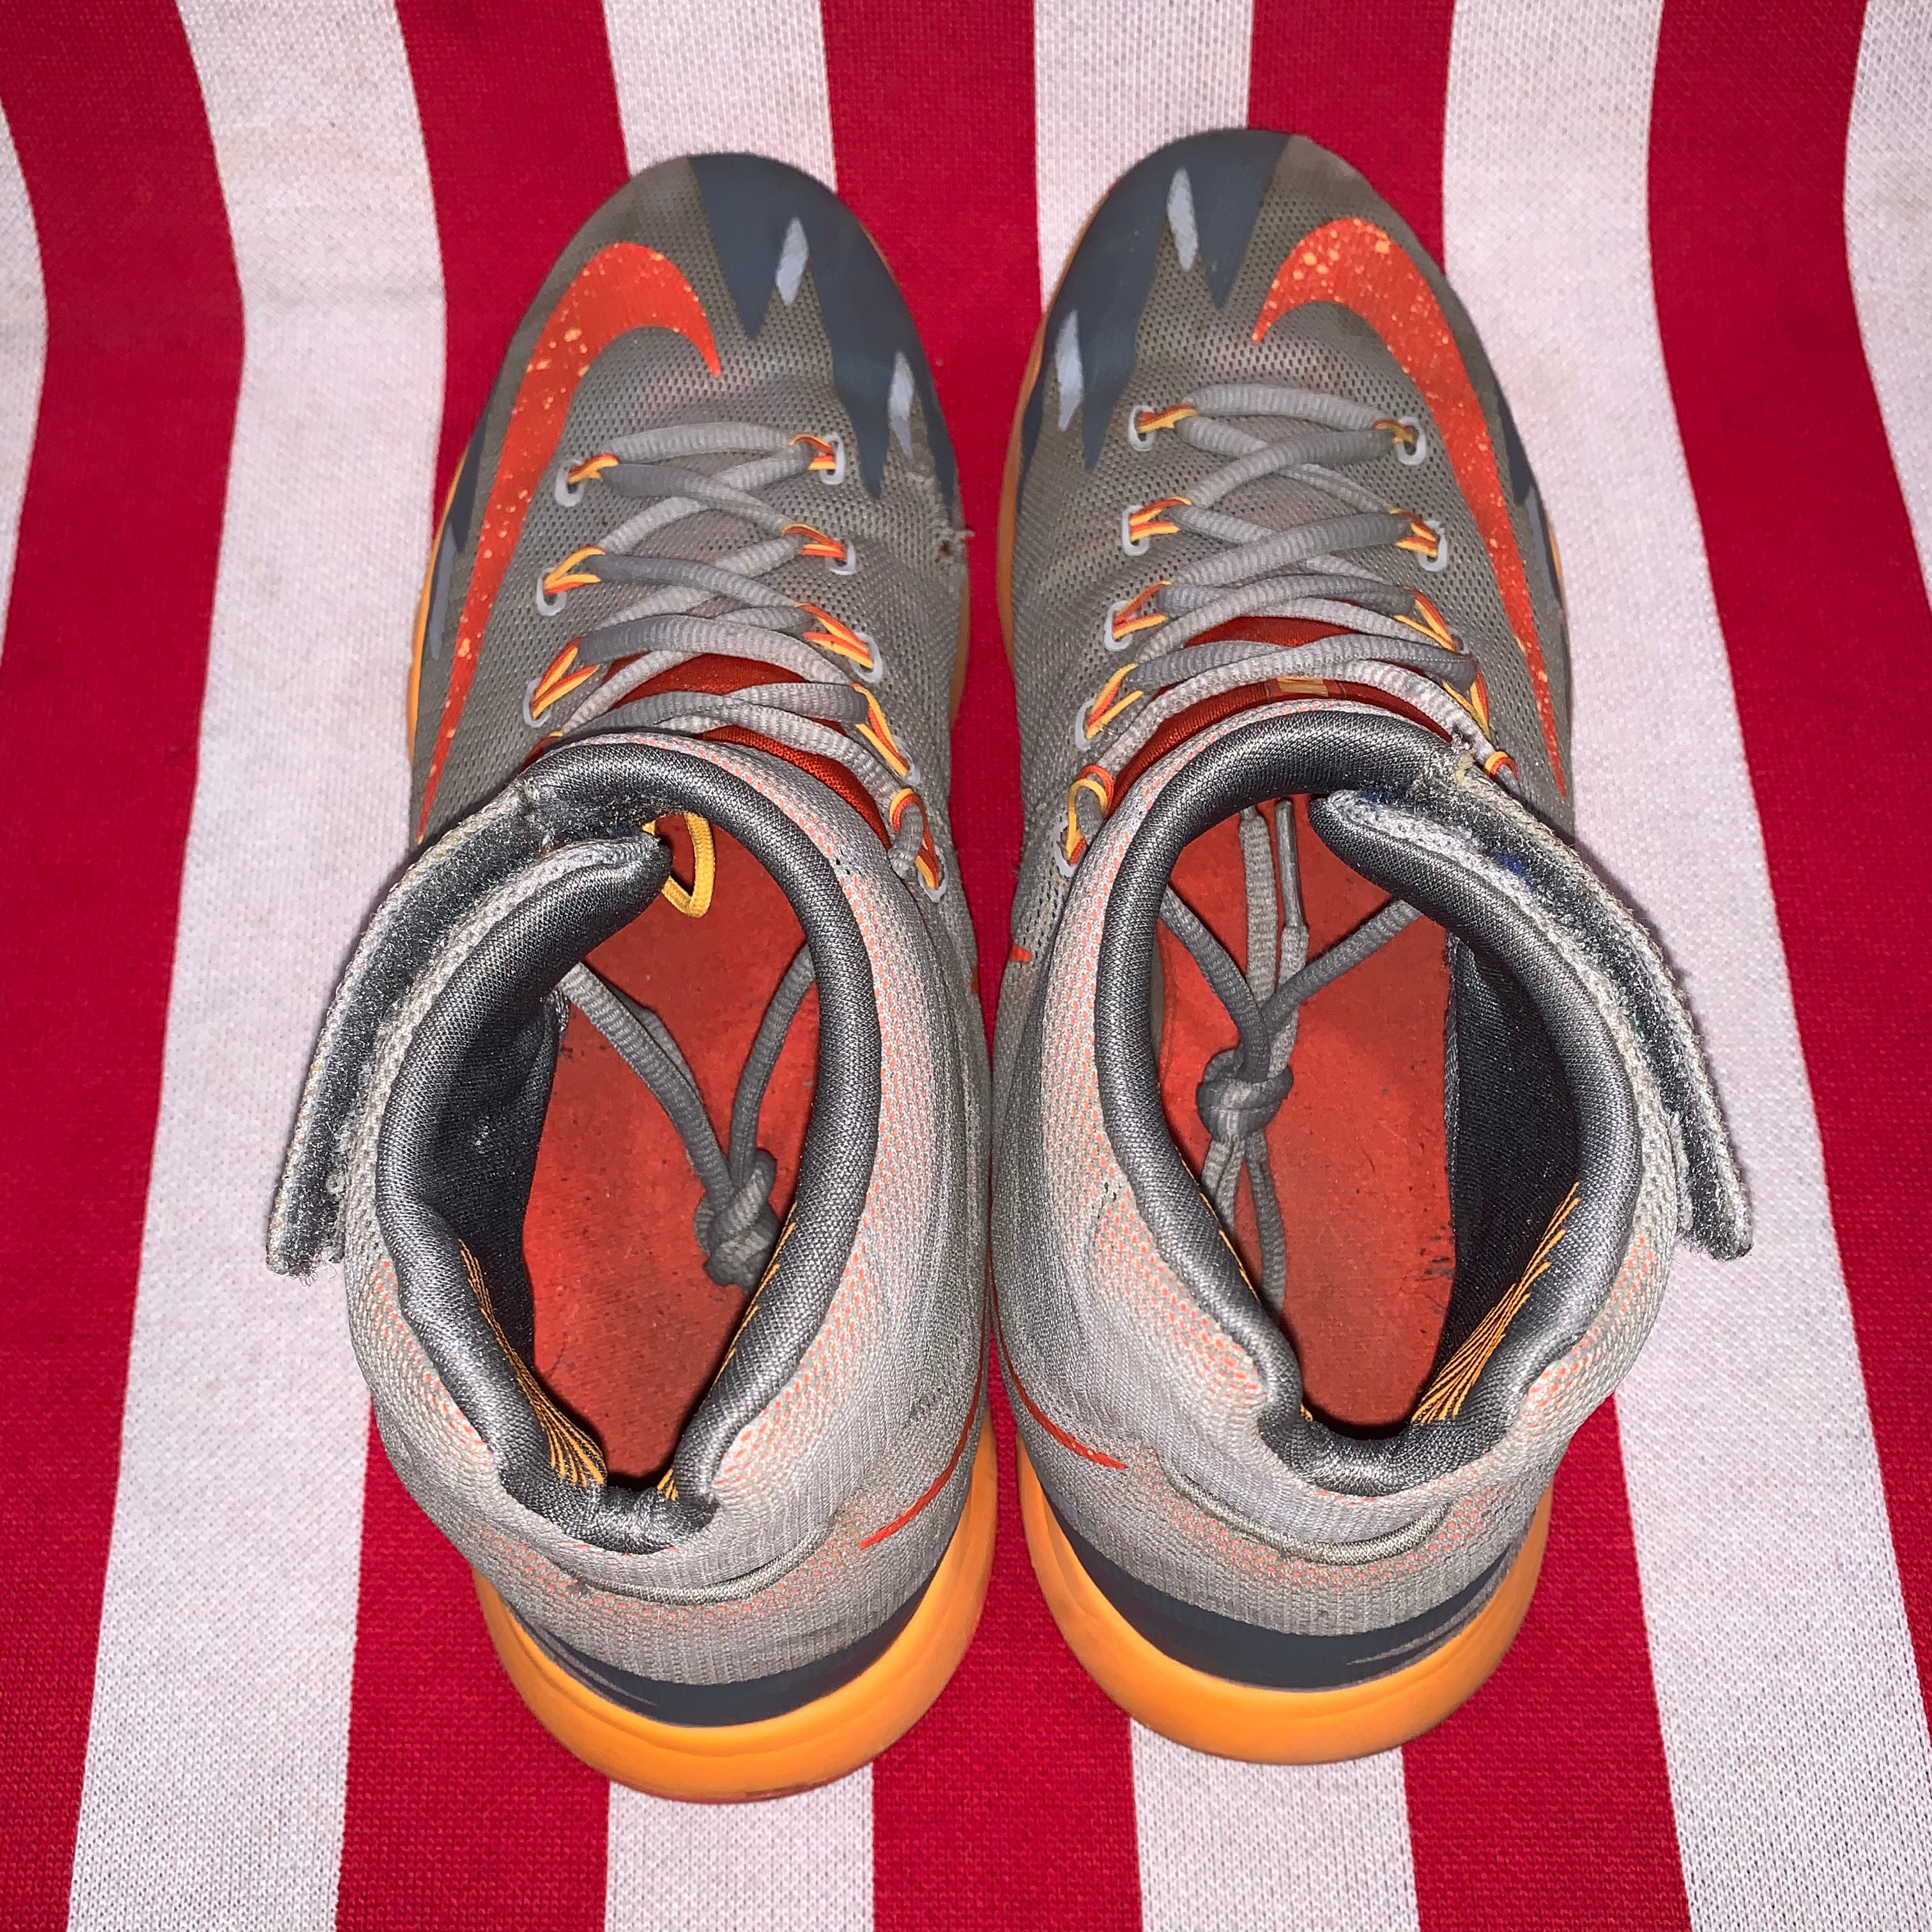 Nike Zoom Hyperrev "Wolf Grey Orange" (size 12)